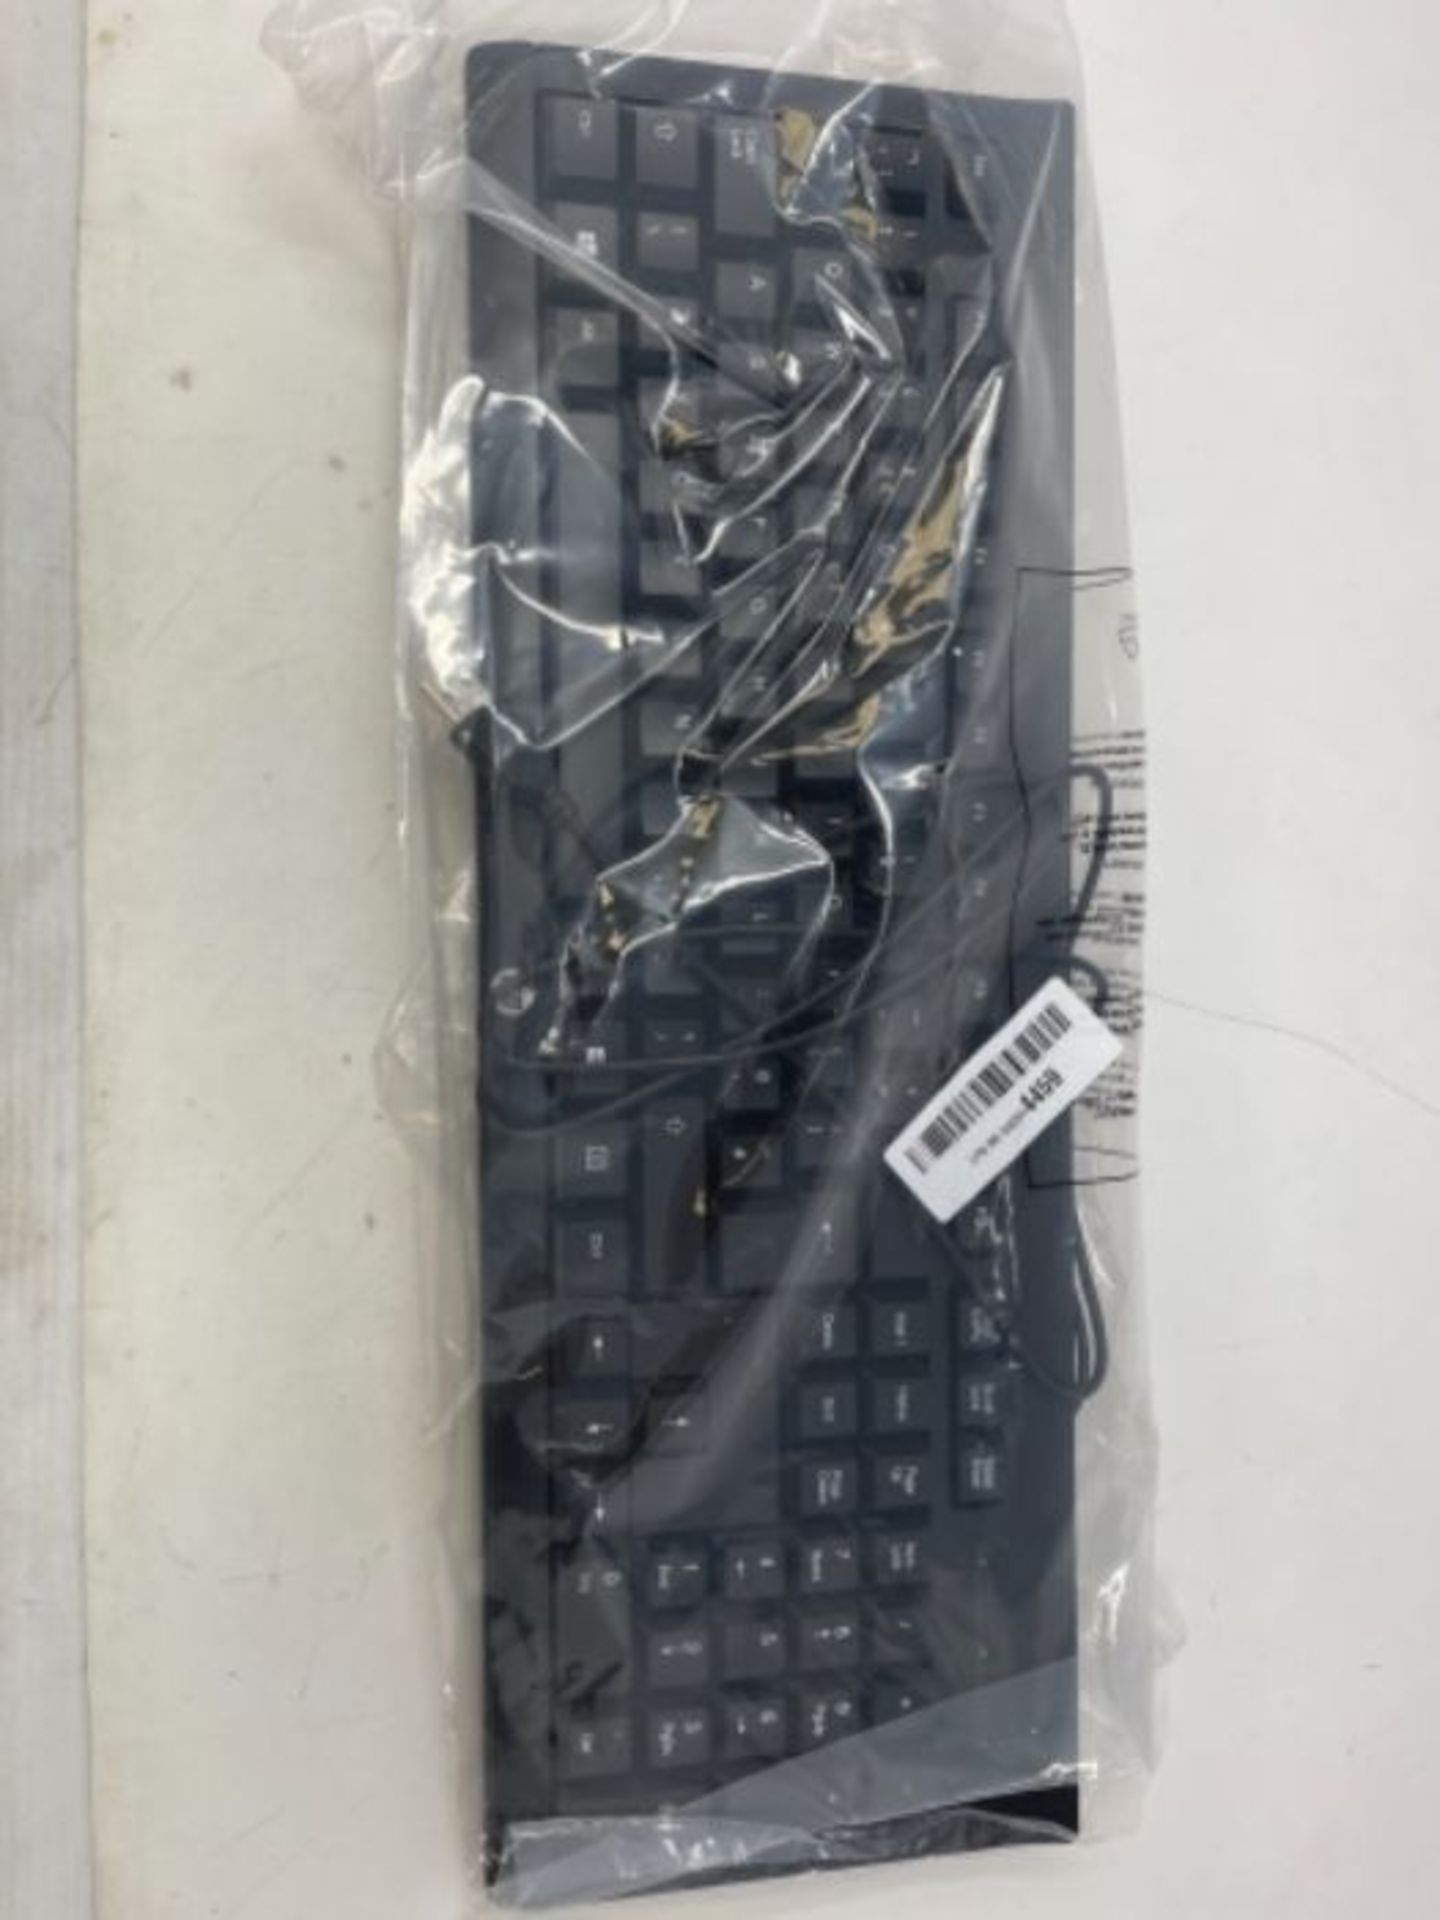 HP K1500 Black Wired USB Keyboard (UK Layout) - Image 2 of 2